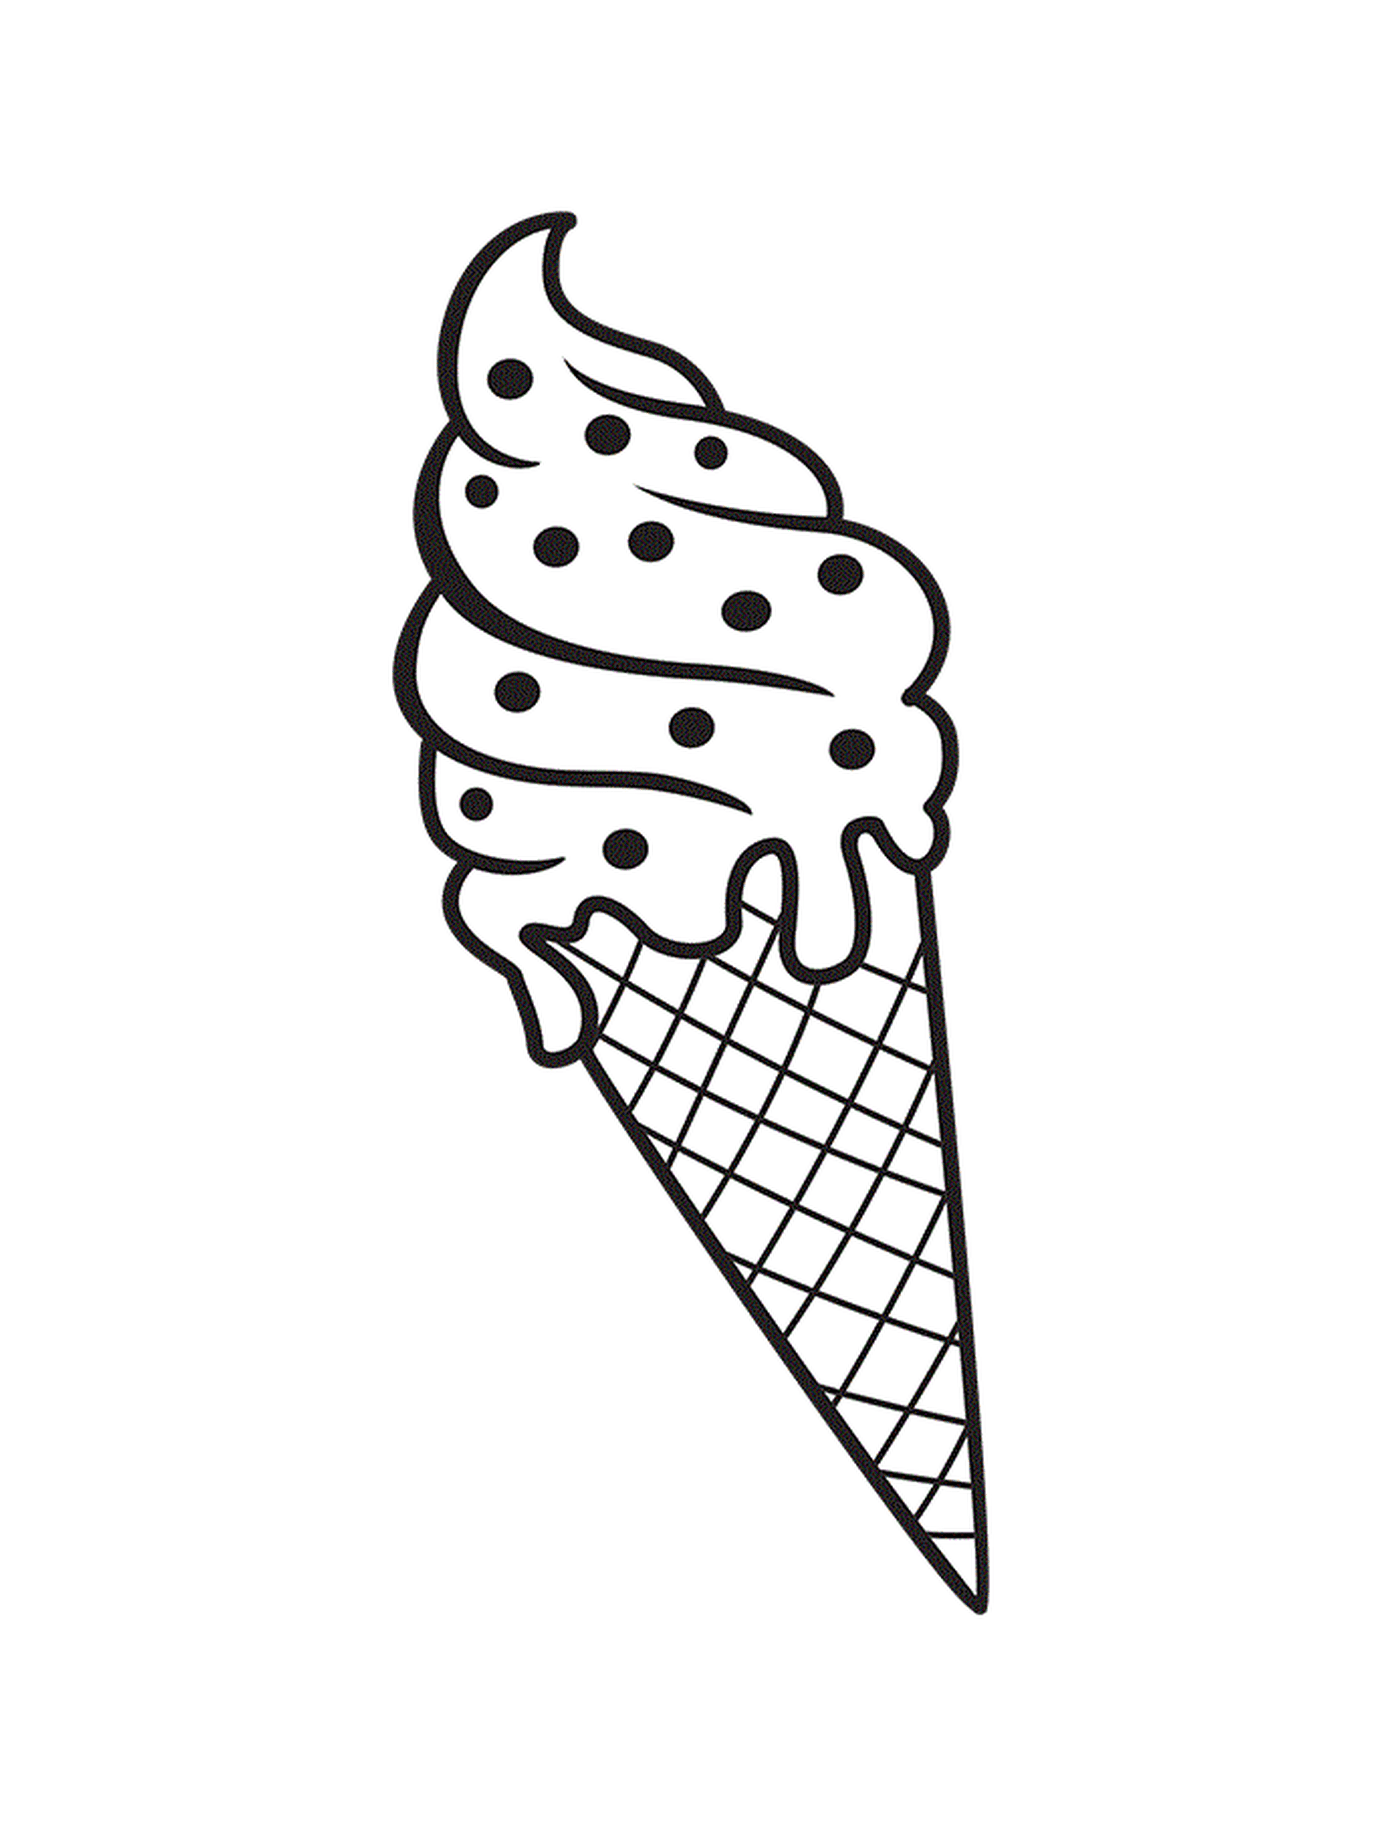  Un grande cono gelato al cioccolato durante le vacanze estive 